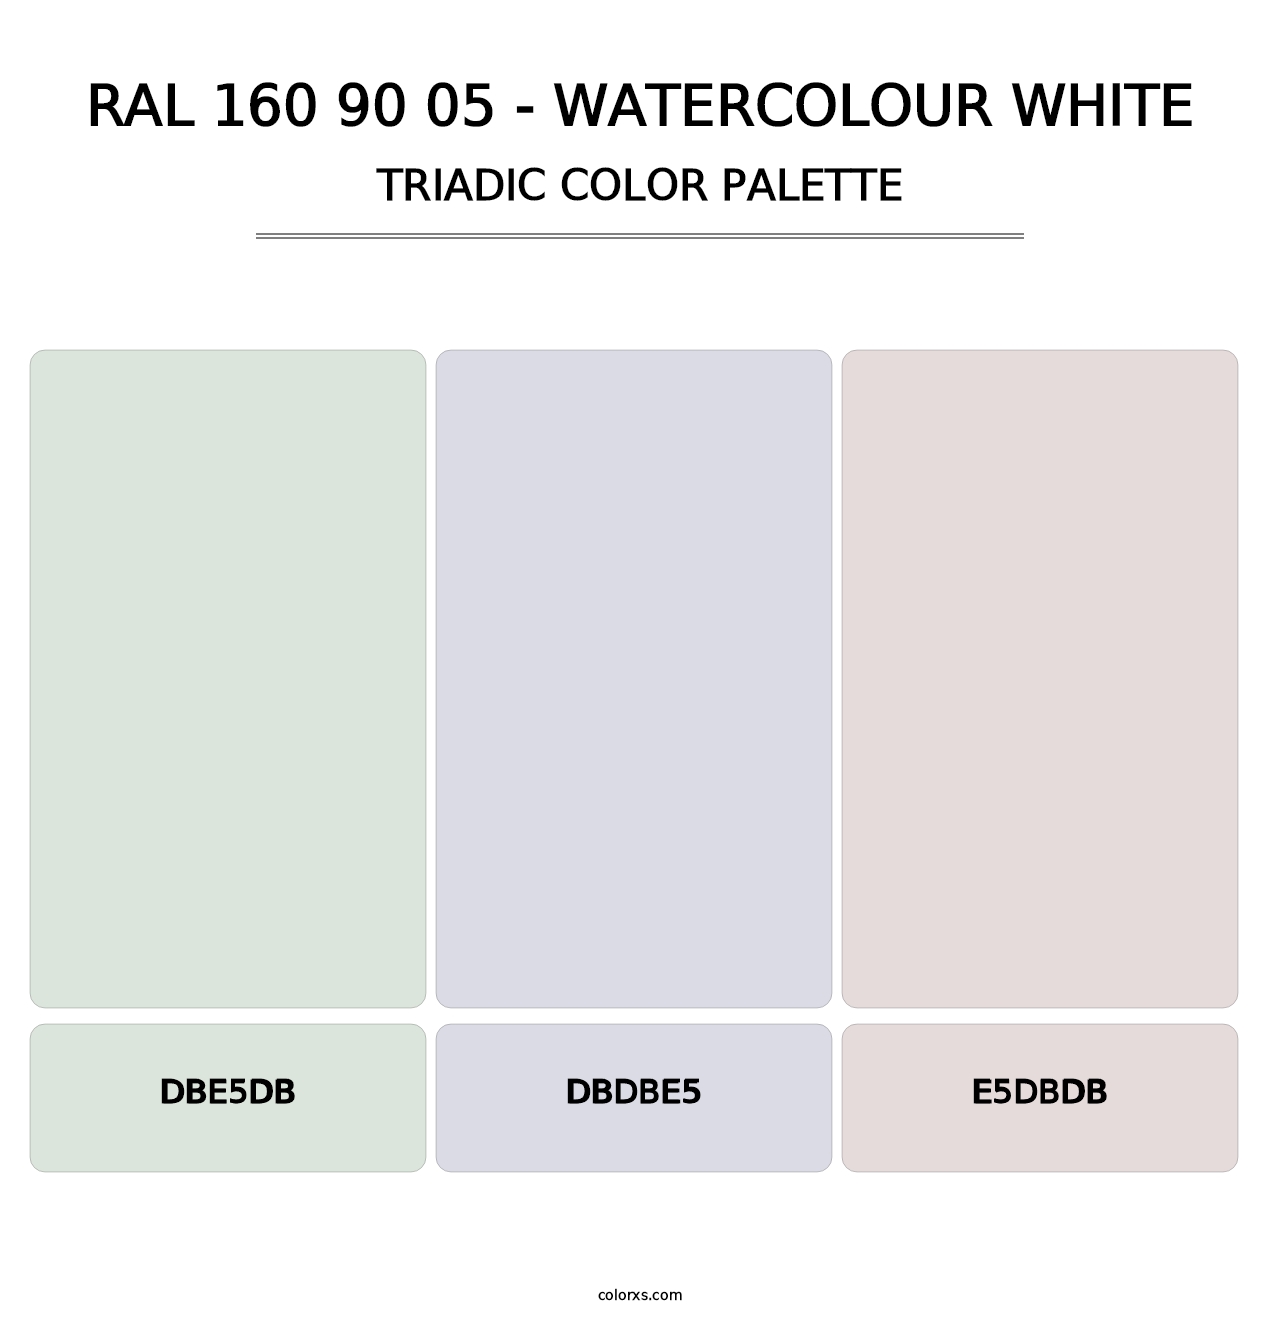 RAL 160 90 05 - Watercolour White - Triadic Color Palette